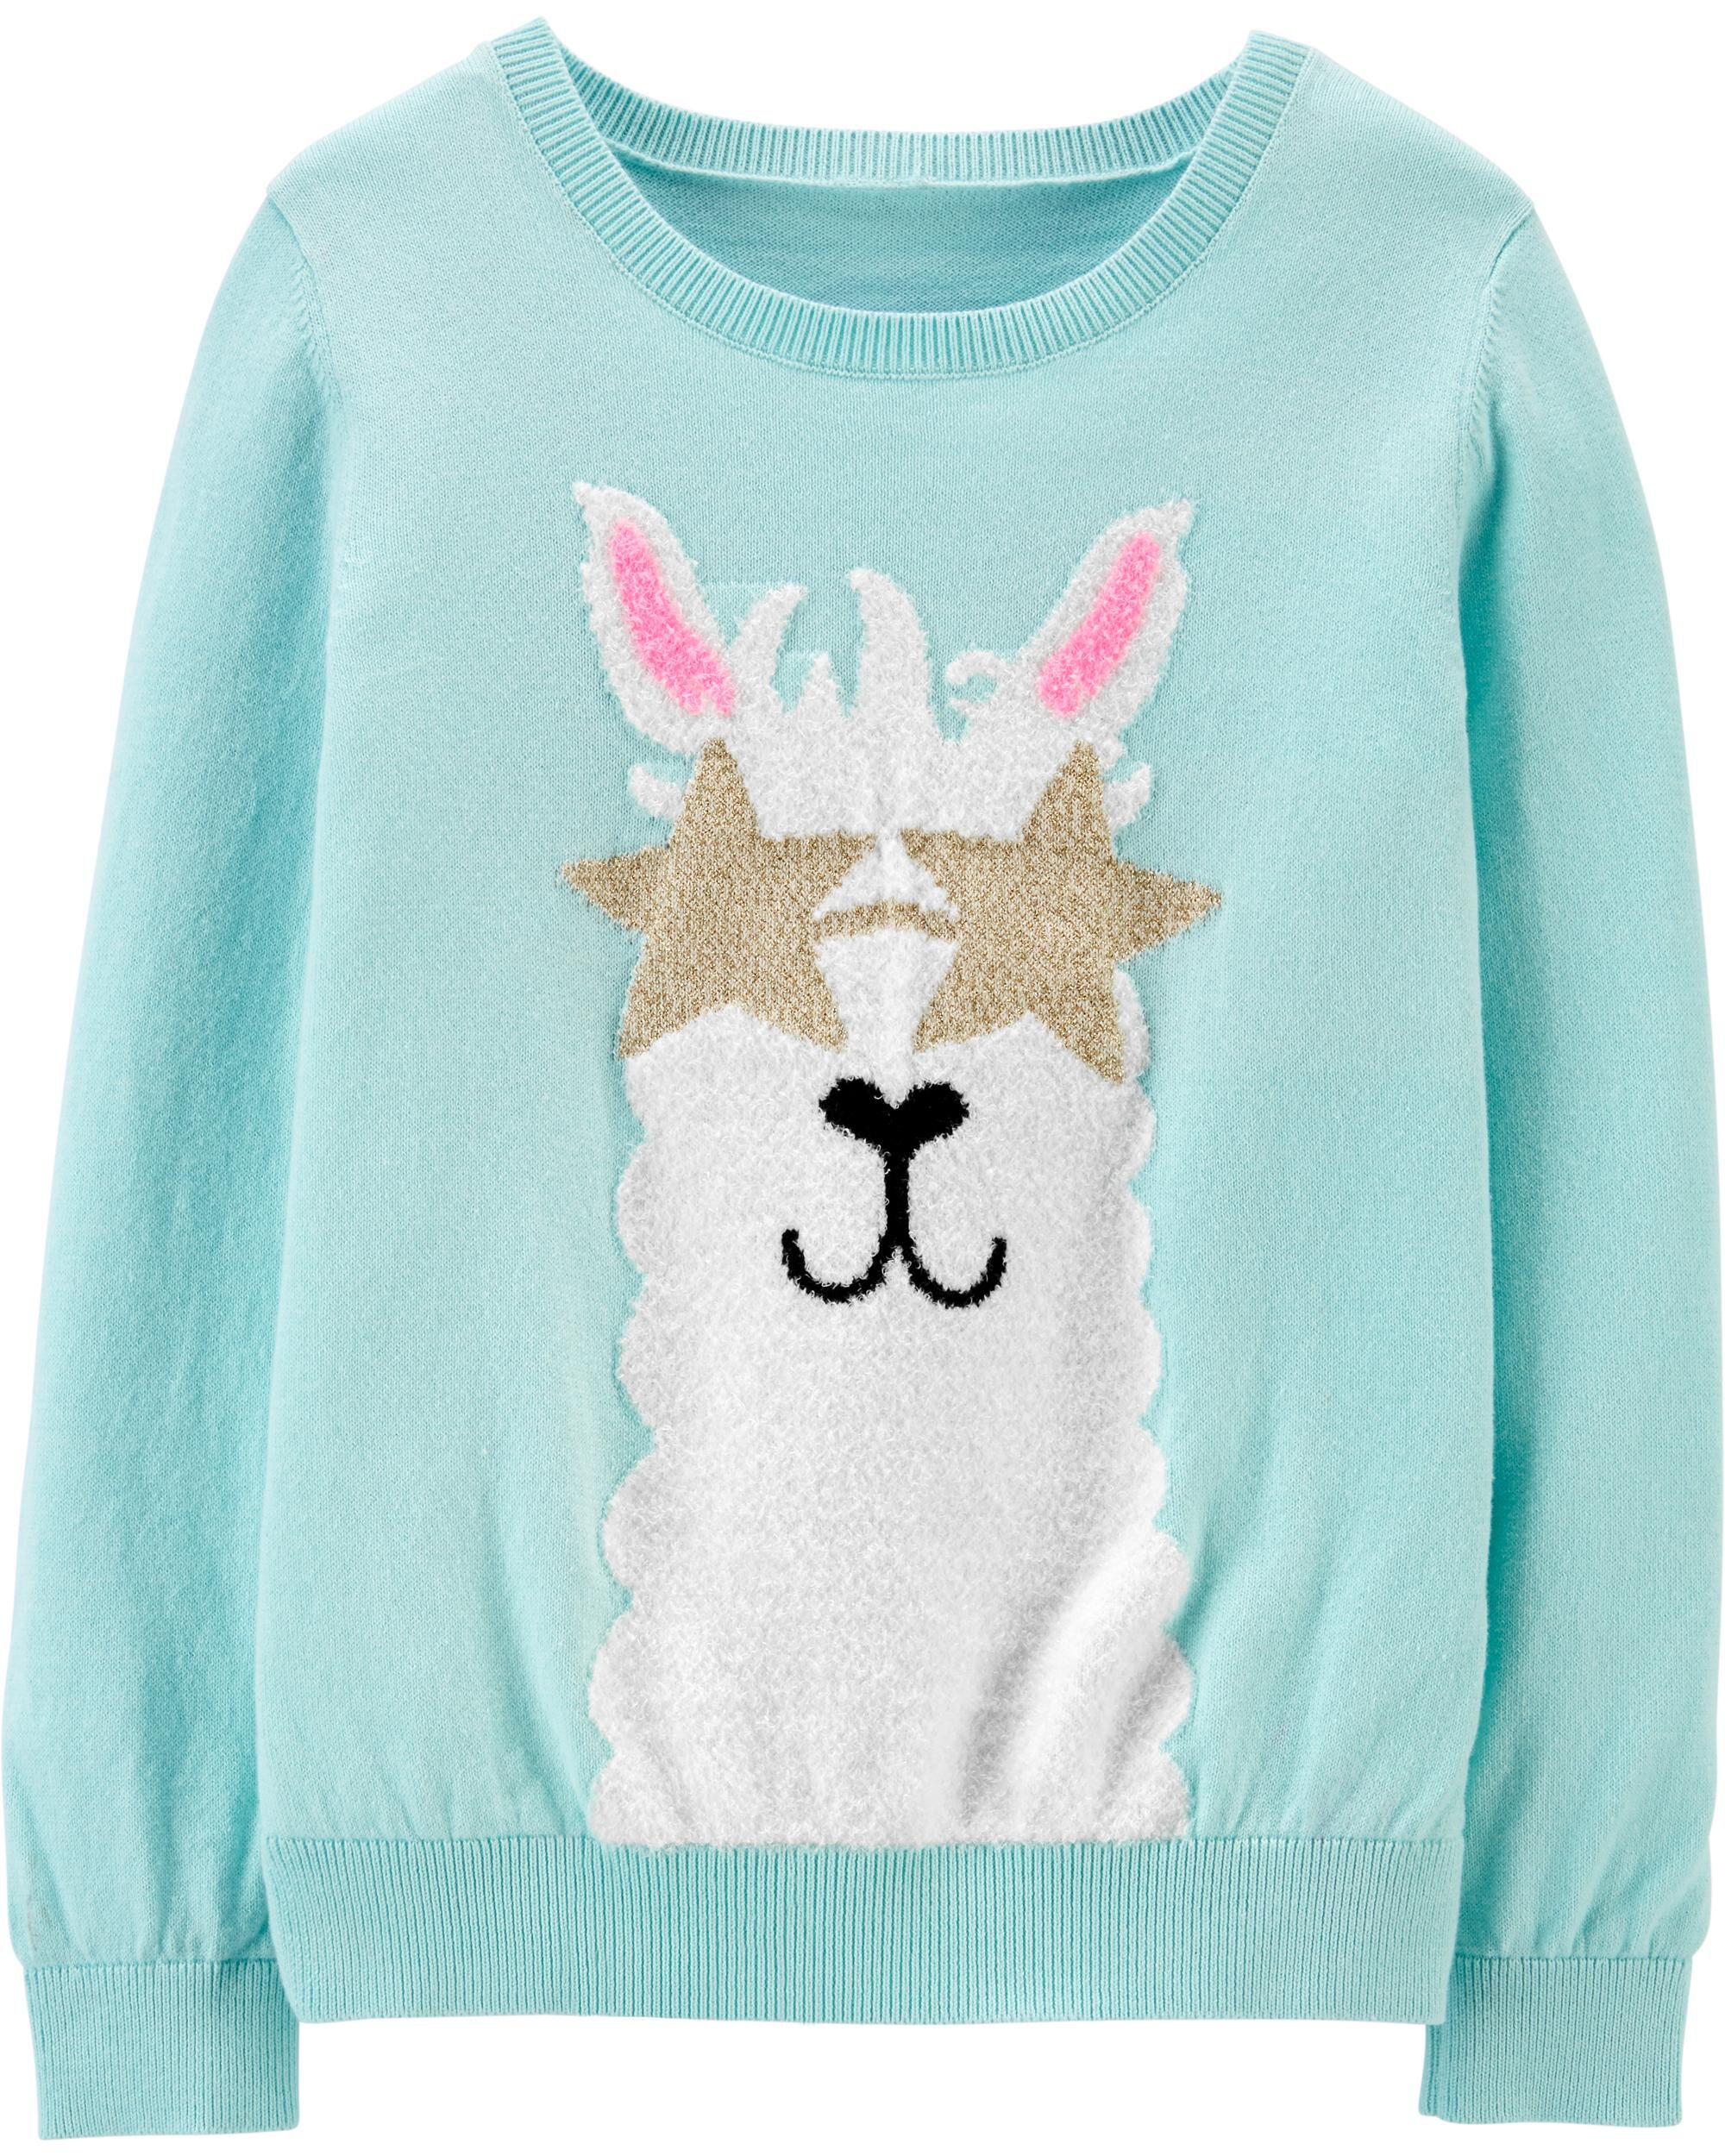  *CLEARANCE* Starry Llama Sweater 